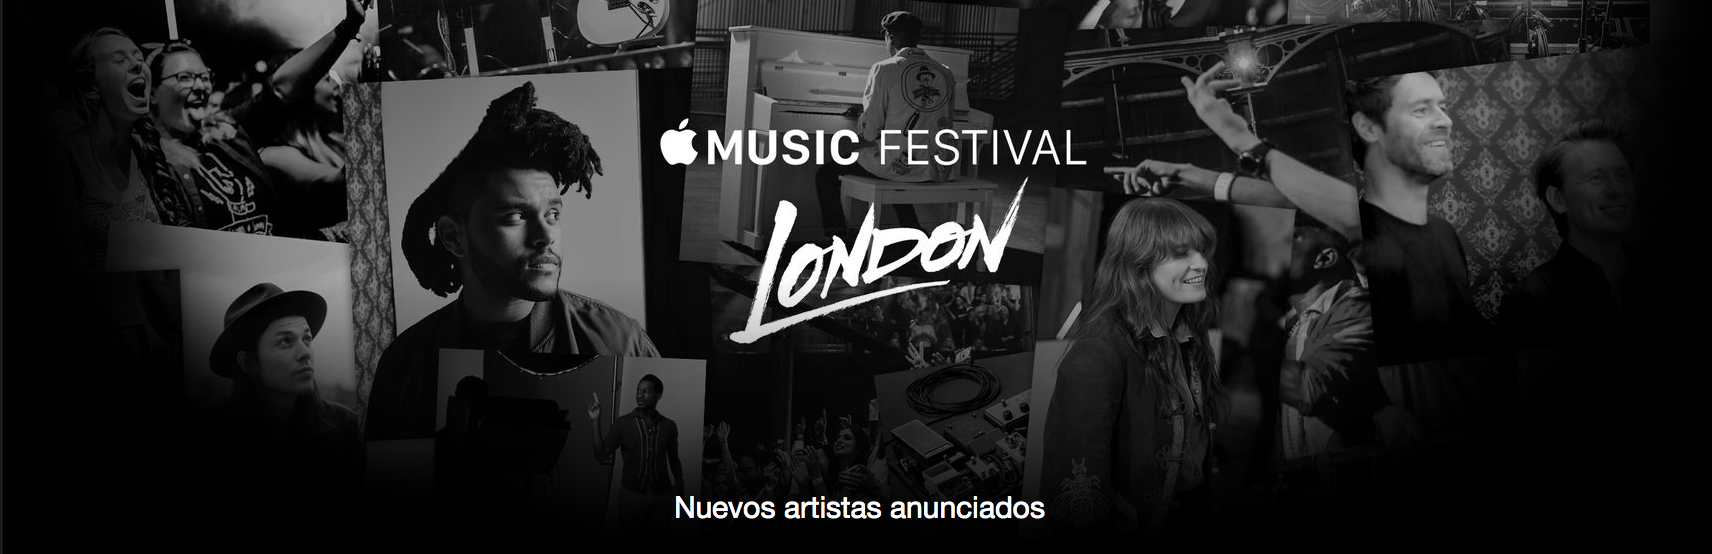 Apple Music Festival promo 2015